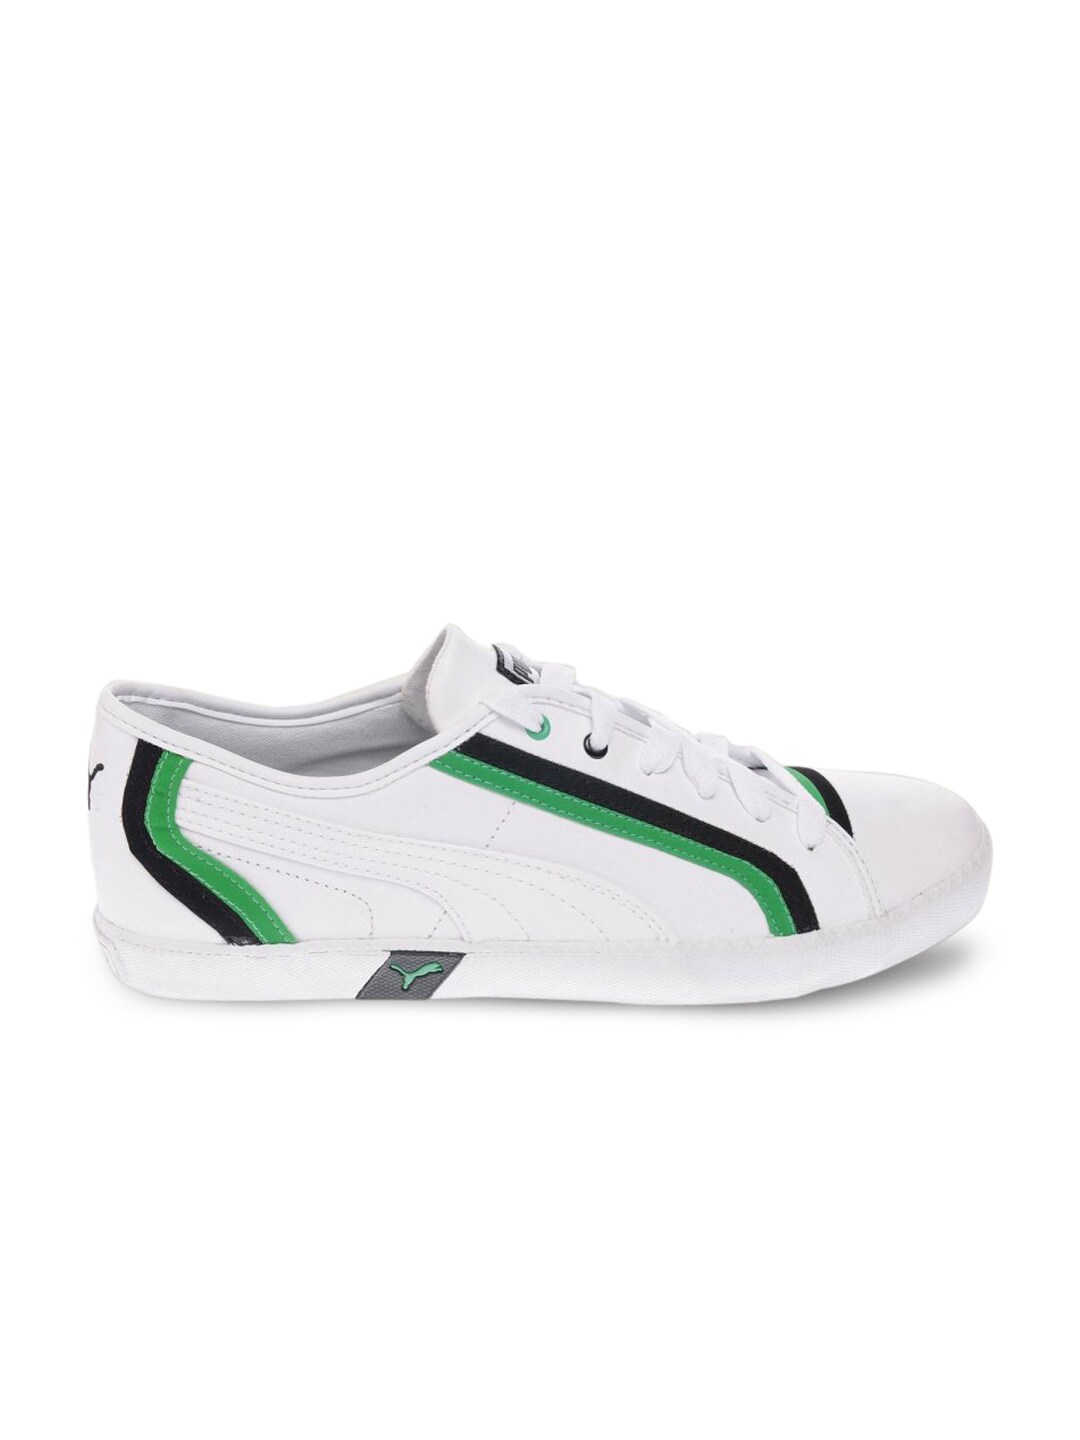 Puma Men White Sneakers